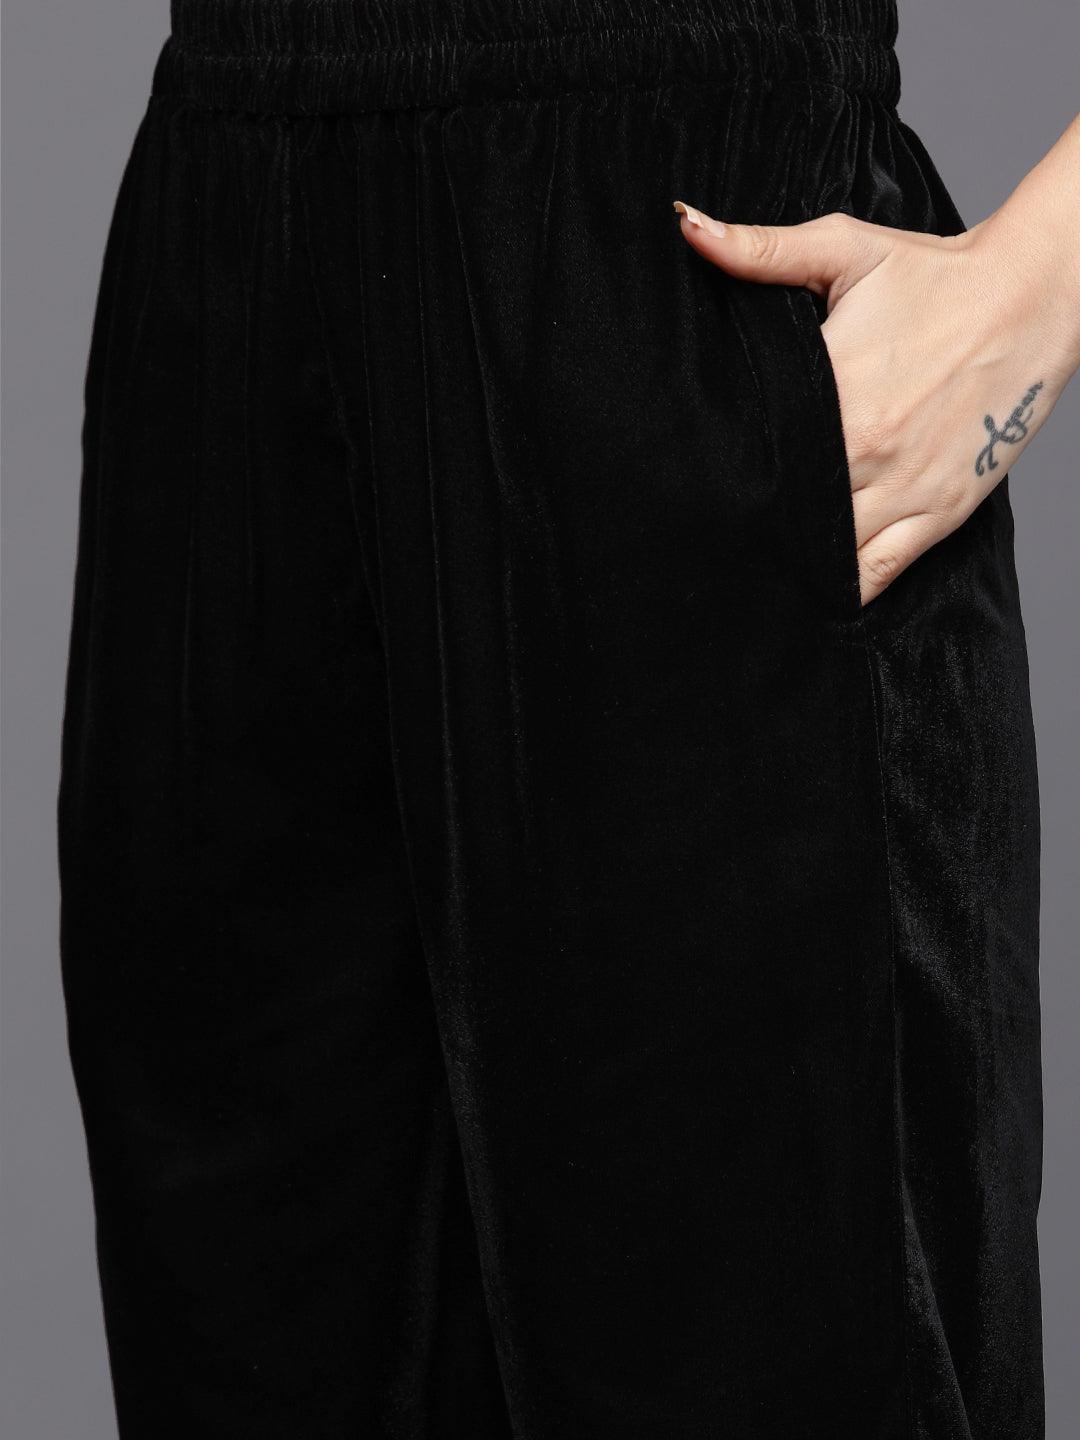 Black Embroidered Velvet Straight Suit Set - Libas